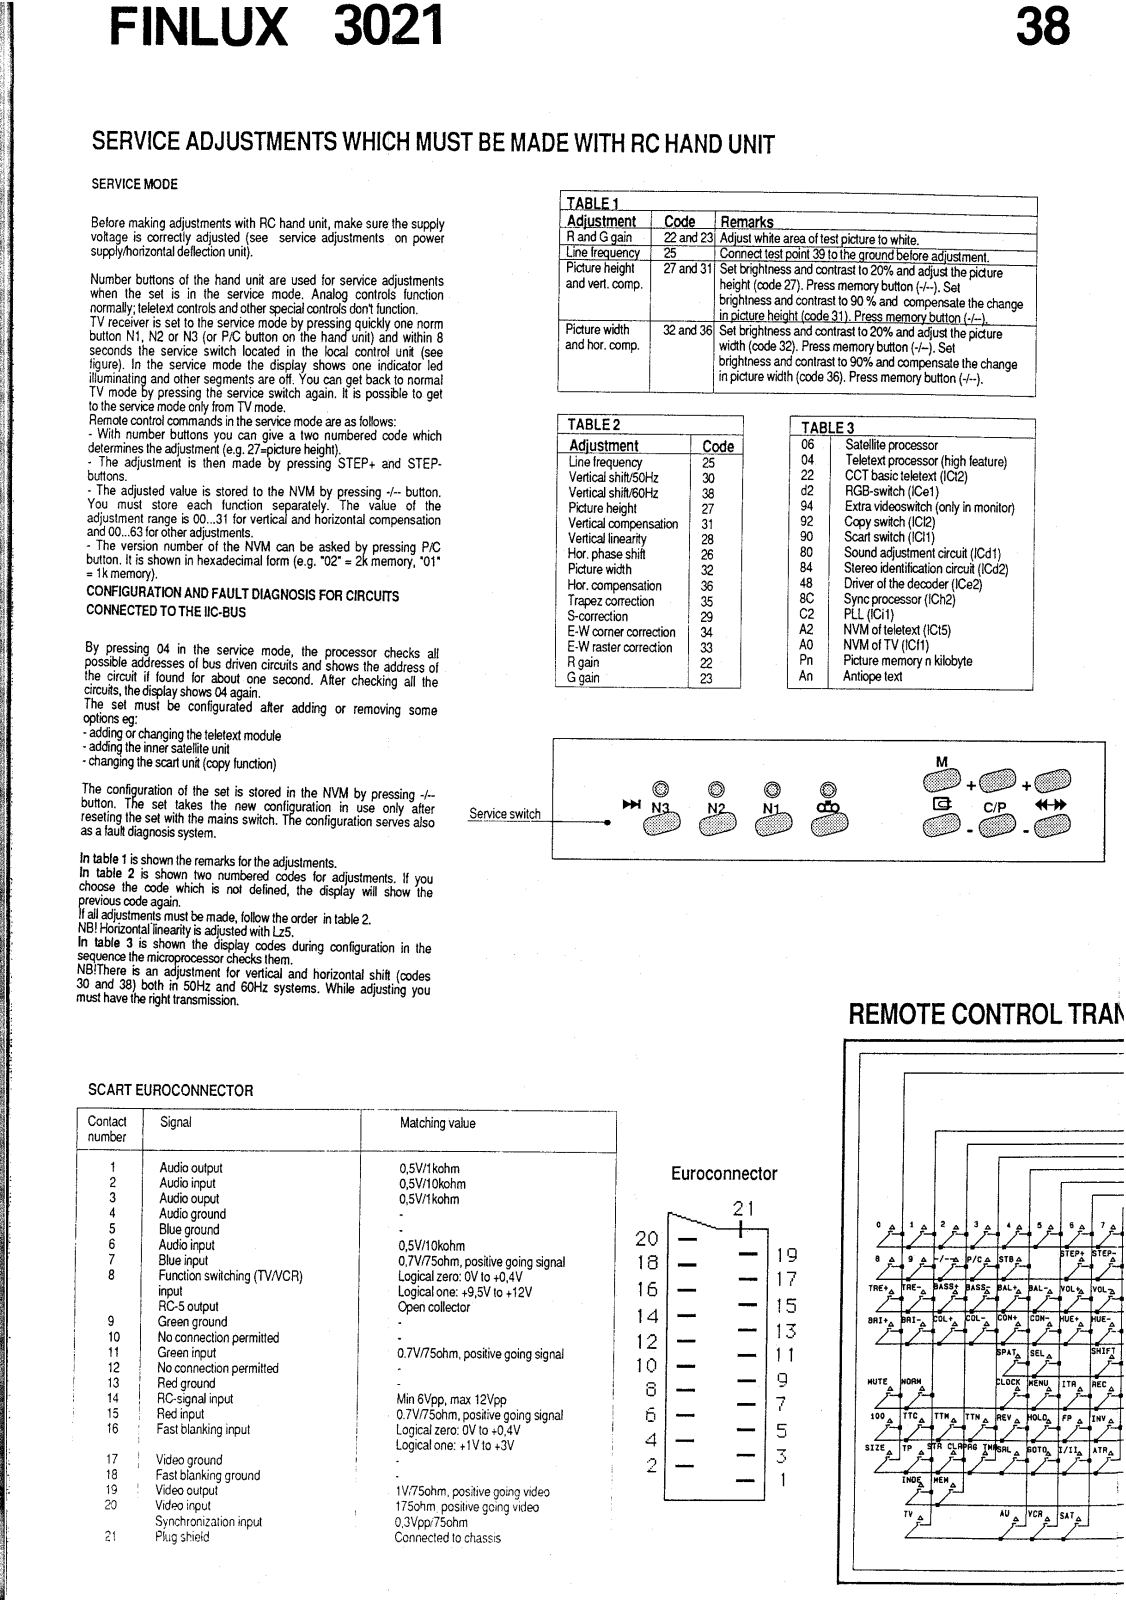 Finlux 3021 Service Manual